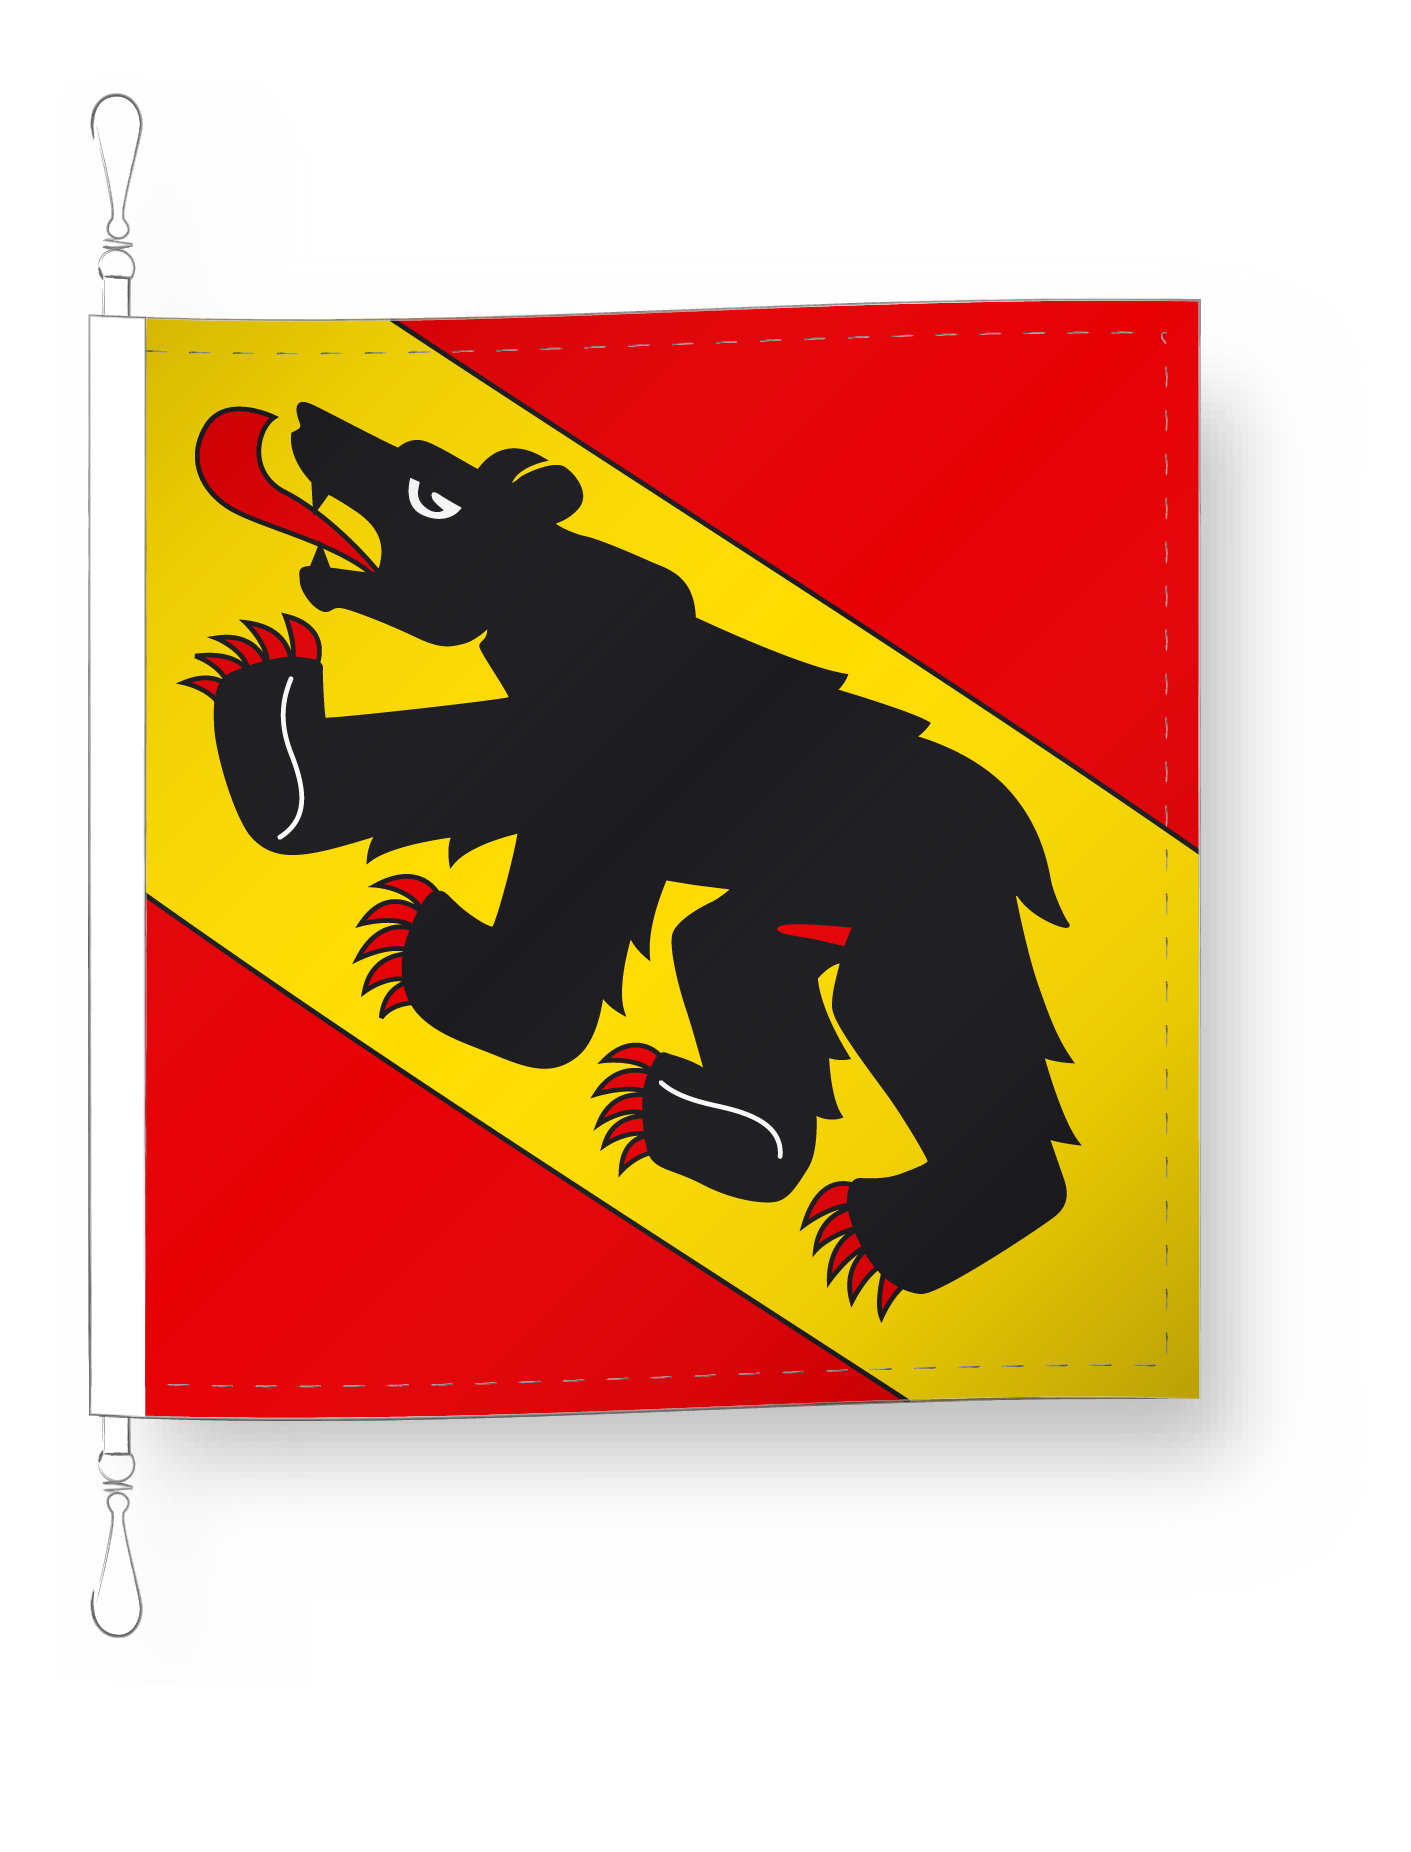 Fahne Kanton Aargau - Aargauer Fahne kaufen